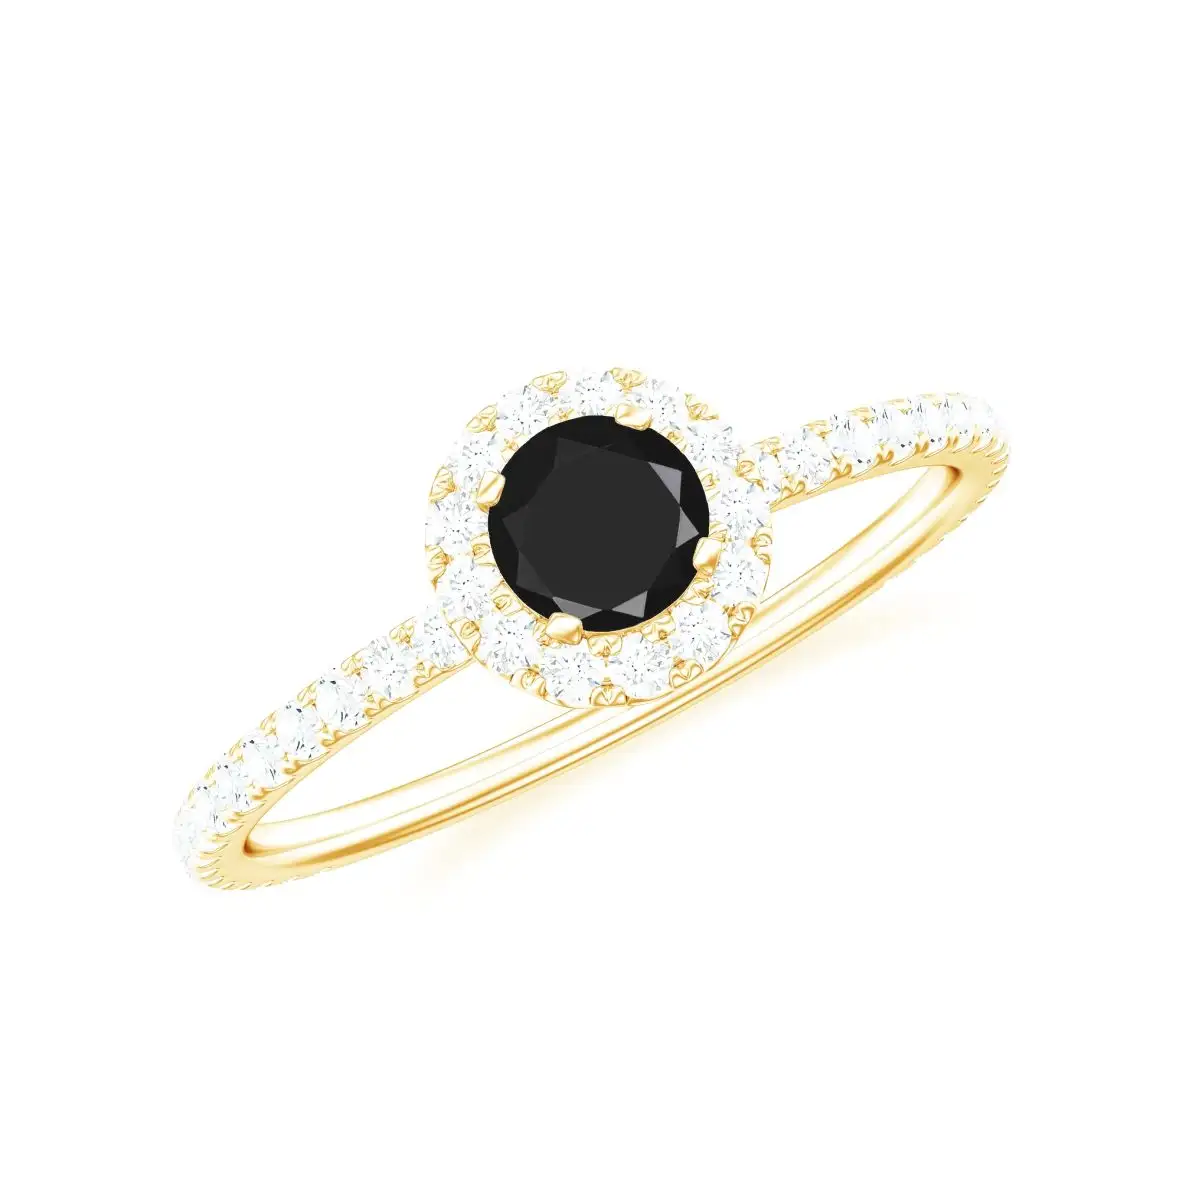 Black Onyx With Diamond Round Black Onyx Stone Ring Oval Black Onyx Ring In 18K Yellow Gold